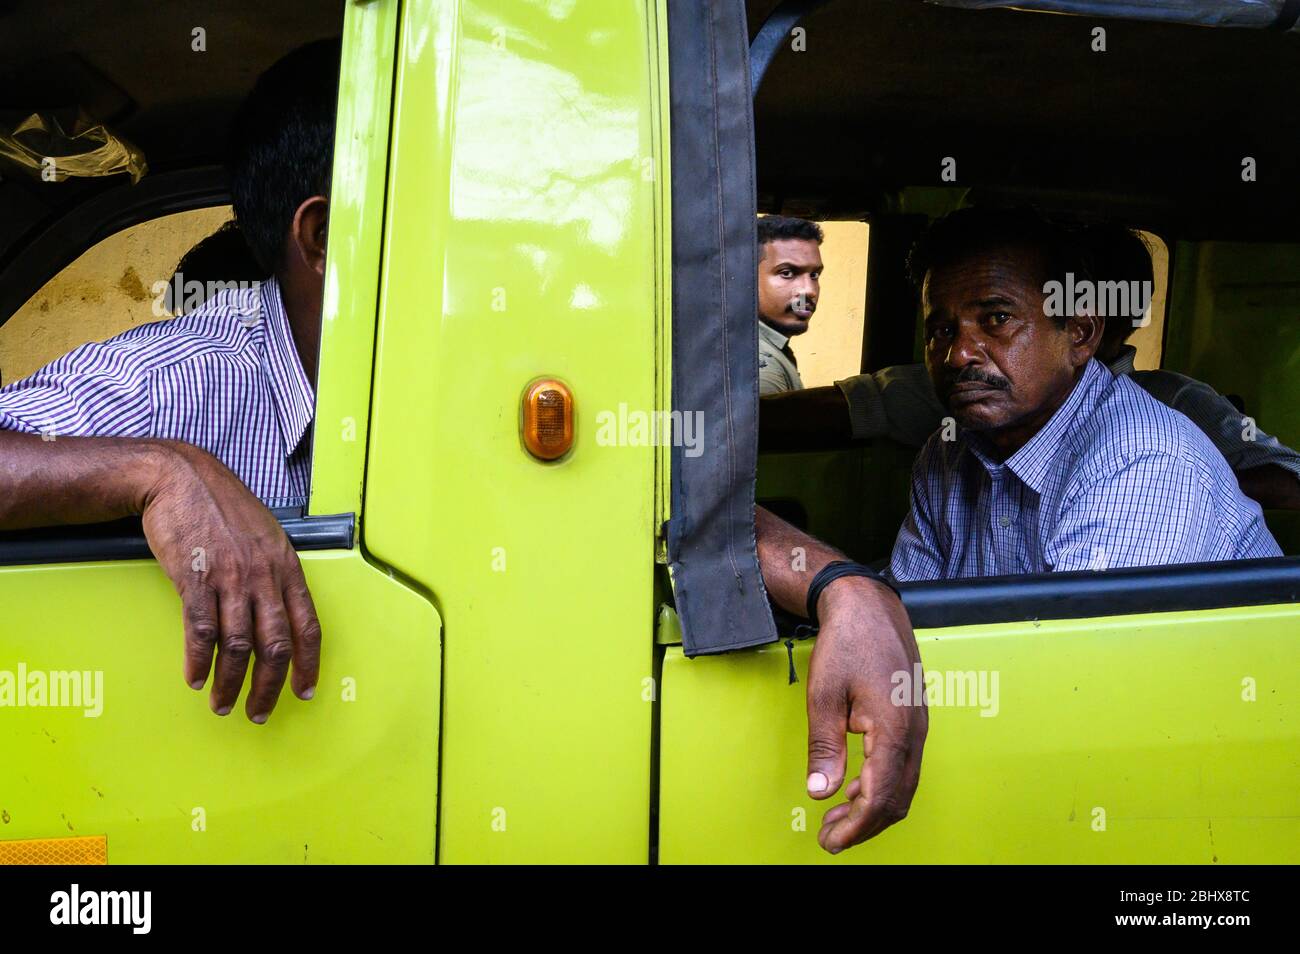 Faces of Indian men as seen through the window of a van, Kochi, India Stock Photo